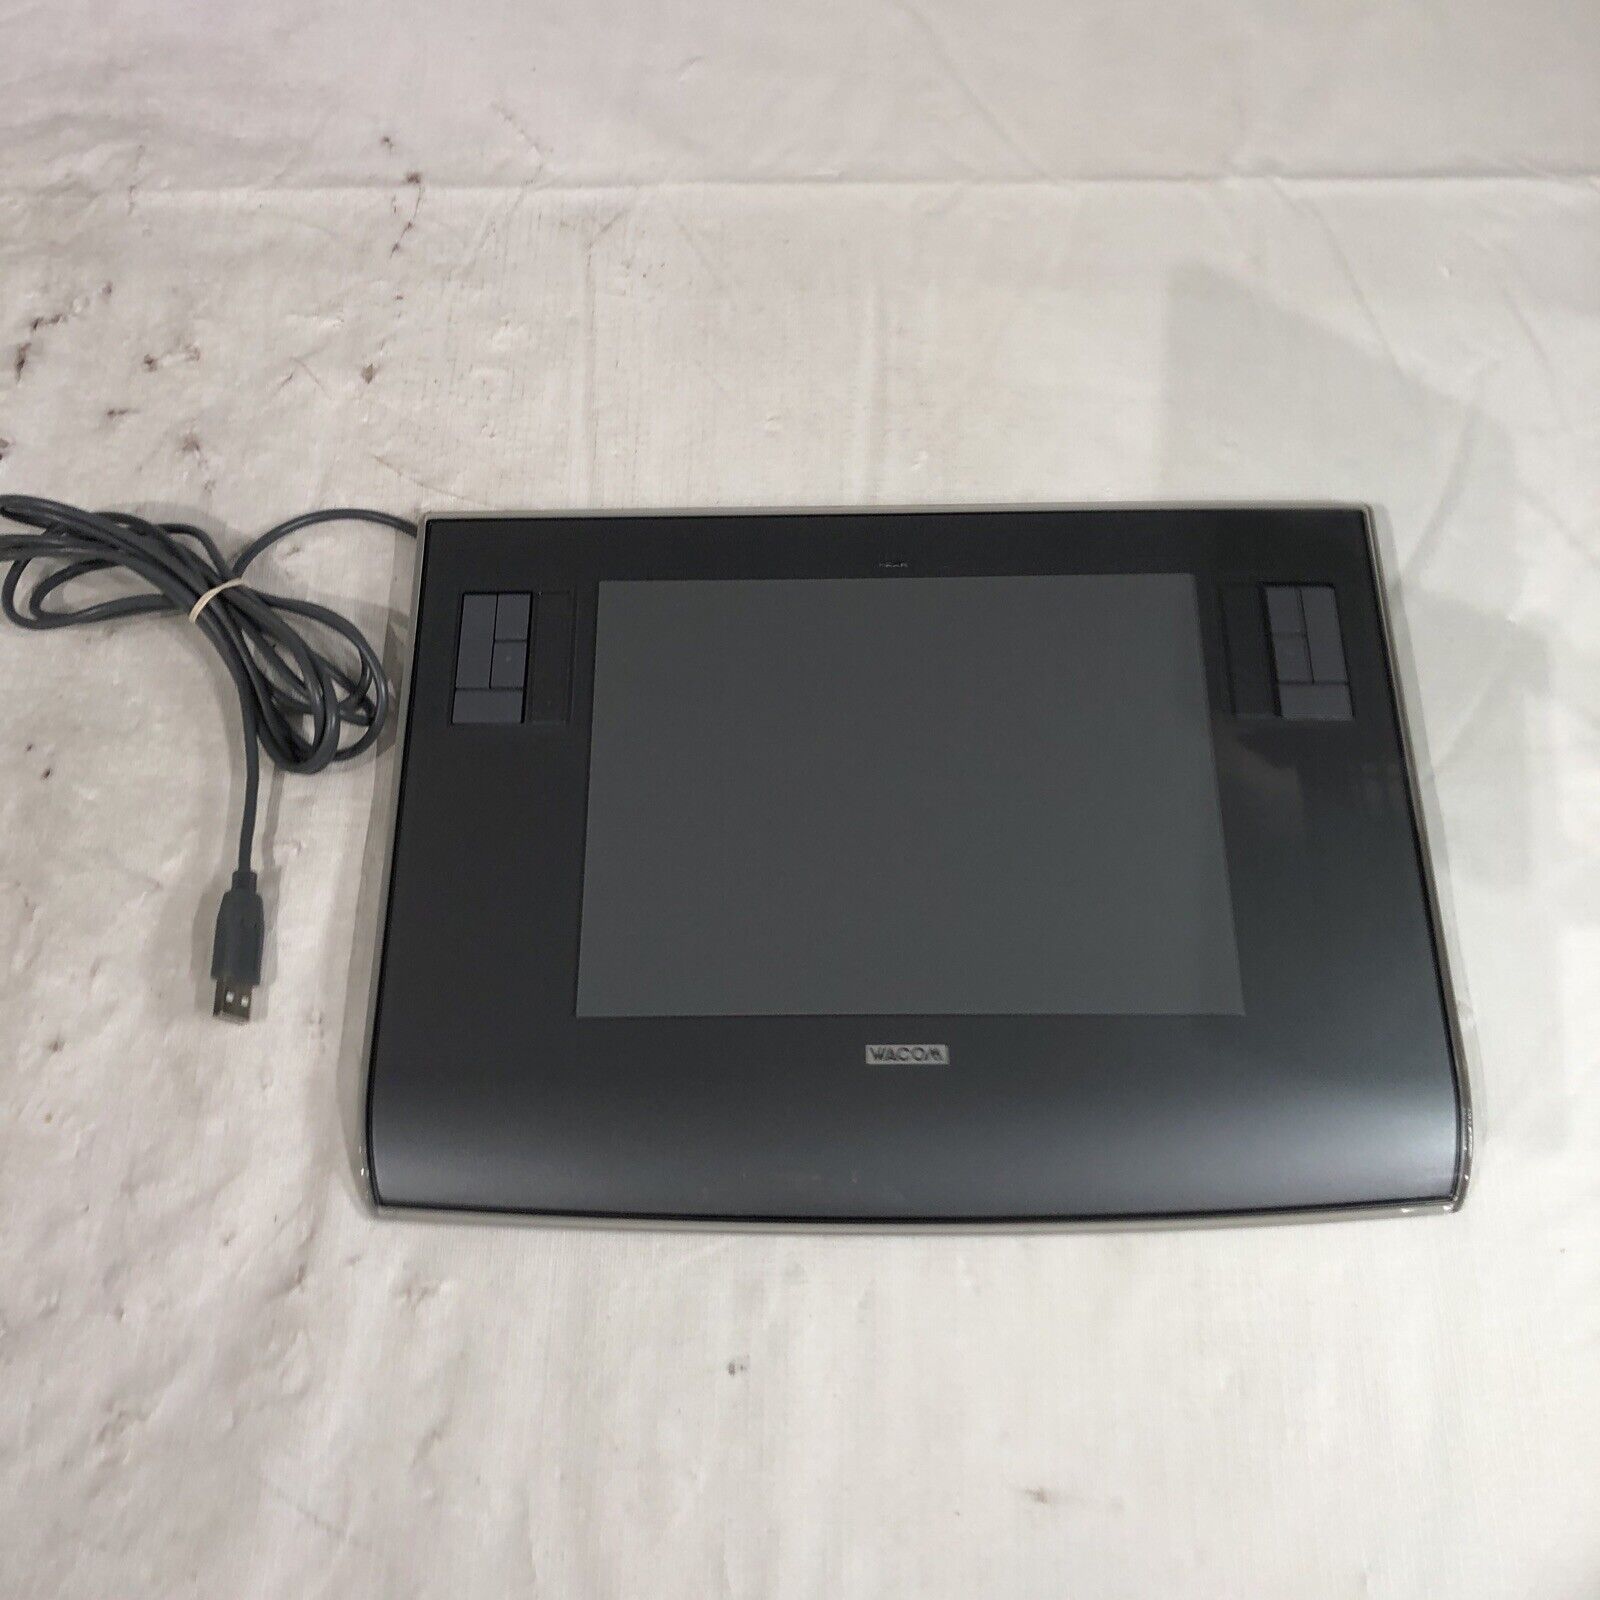 Wacom PTZ-630 Intuos 3 Digital Graphic Drawing Tablet Medium w/o Pen